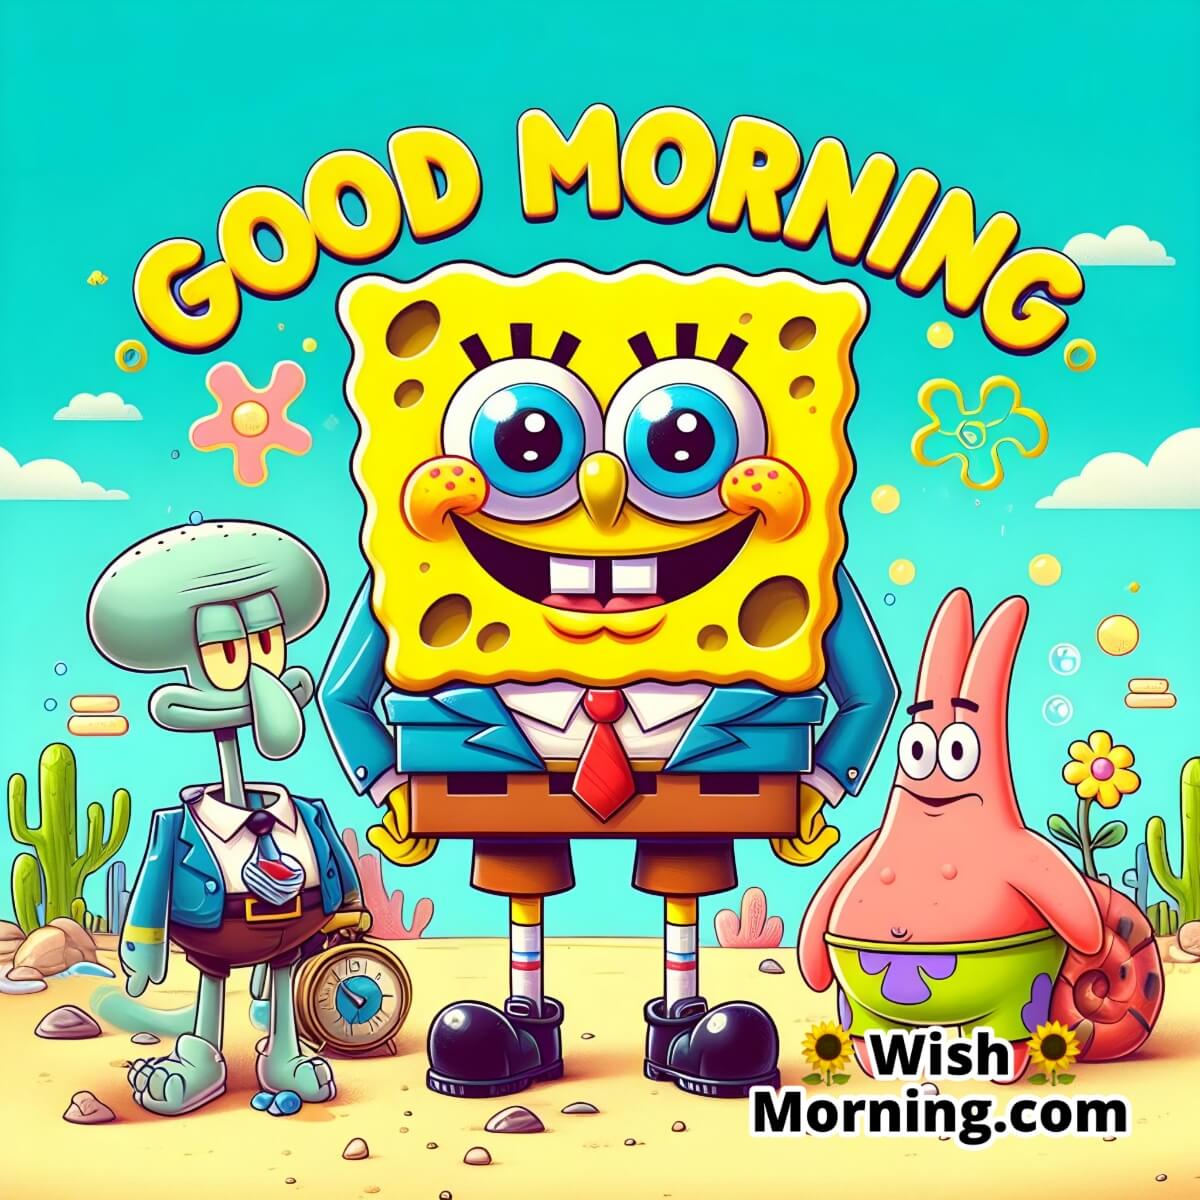 Good Morning Spongebob Squarepants Image